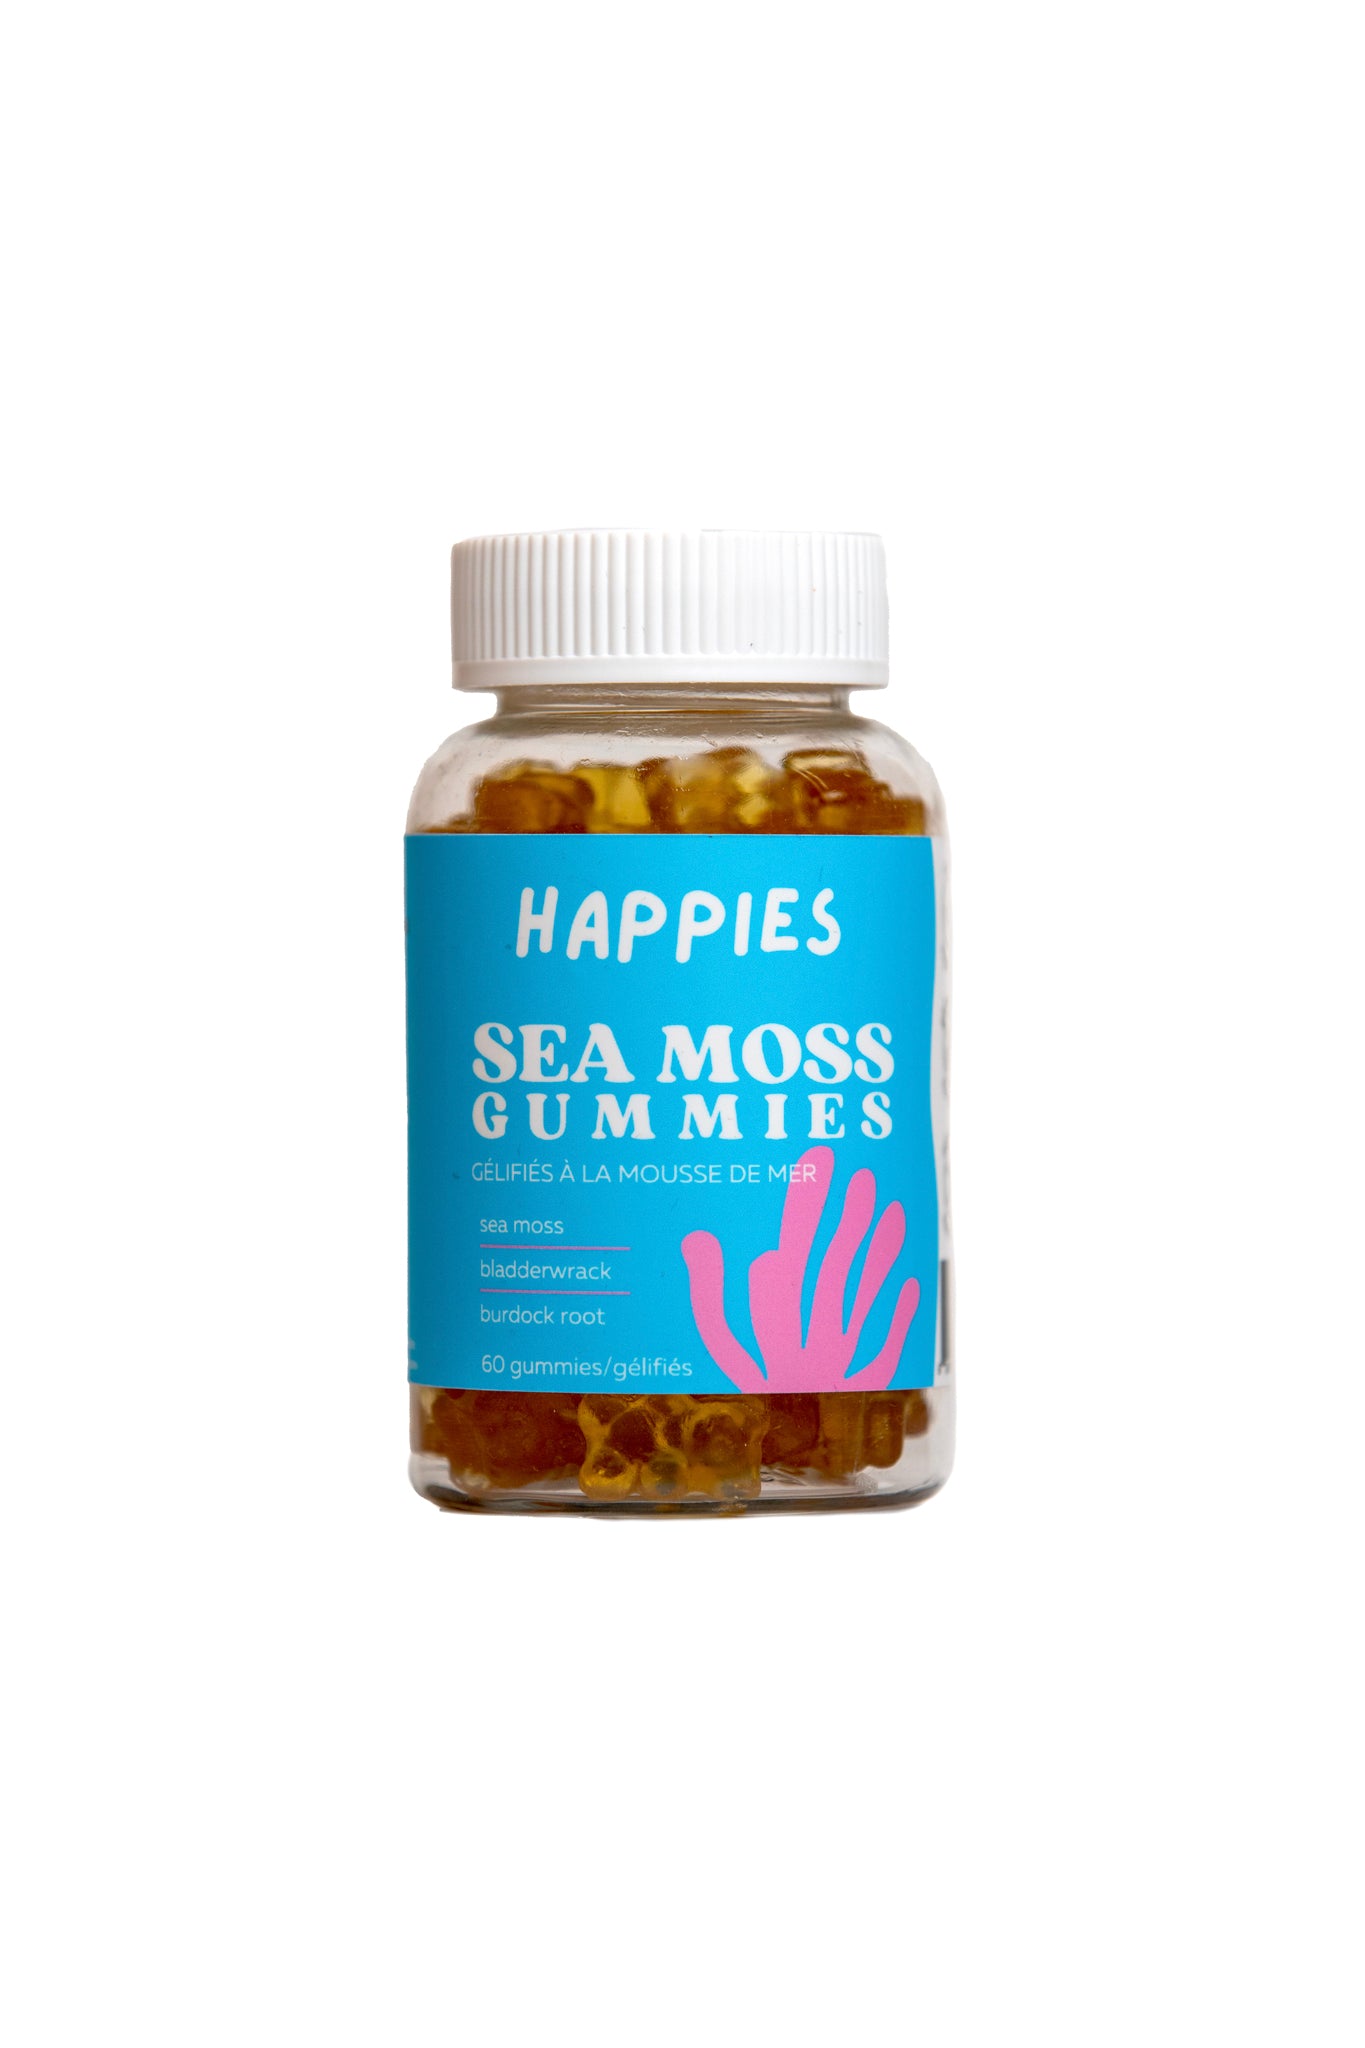 Sea Moss Gummies - 1 month supply